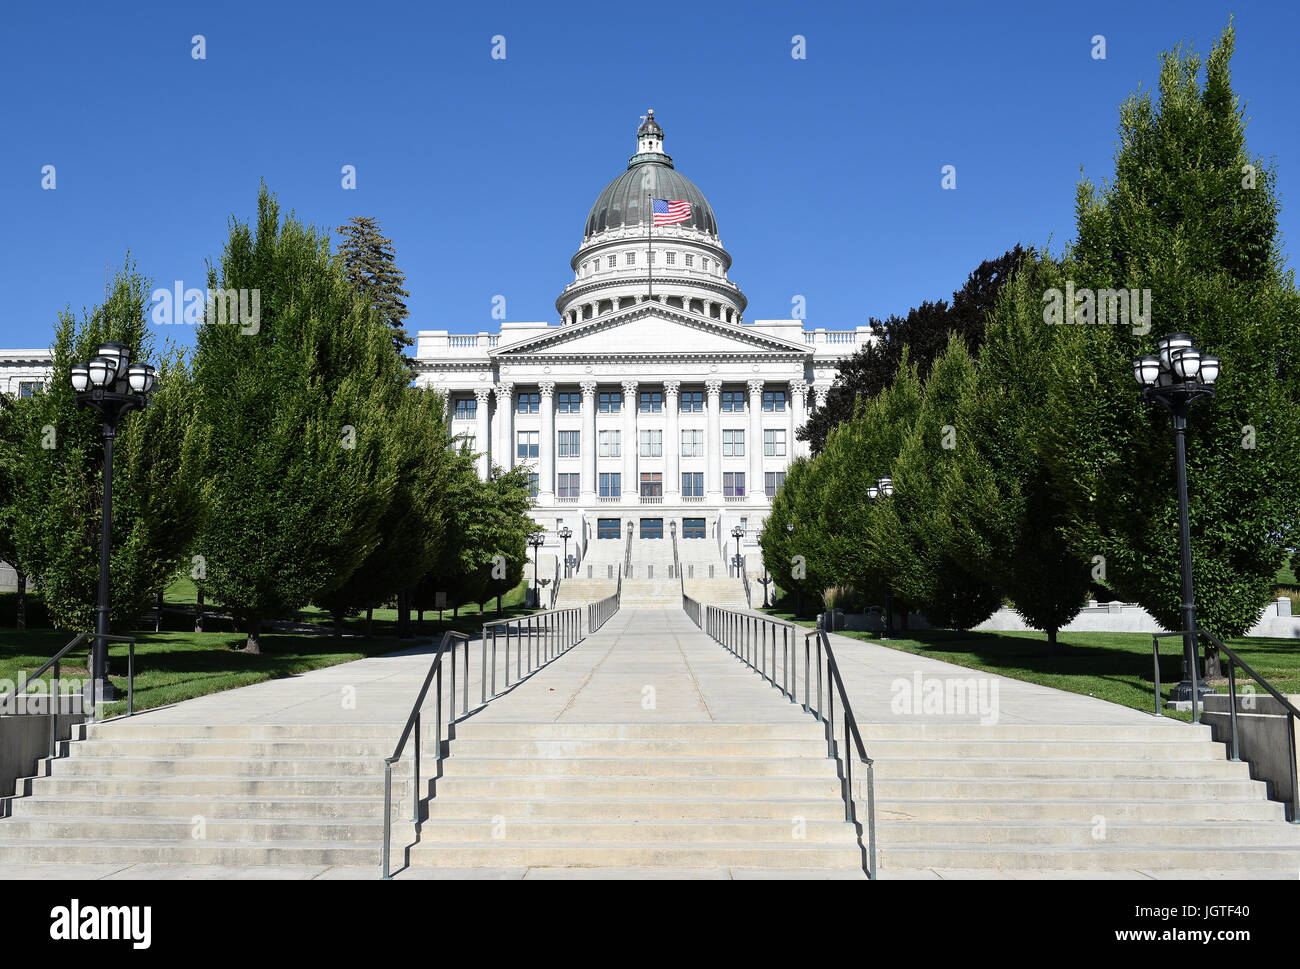 SALT LAKE CITY, UTAH - 28. Juni 2017: Utah State Capitol building Westseite. Im Jahr 1888 spendete die Stadt das Land, namens Arsenal Hill, Utah Terr Stockfoto